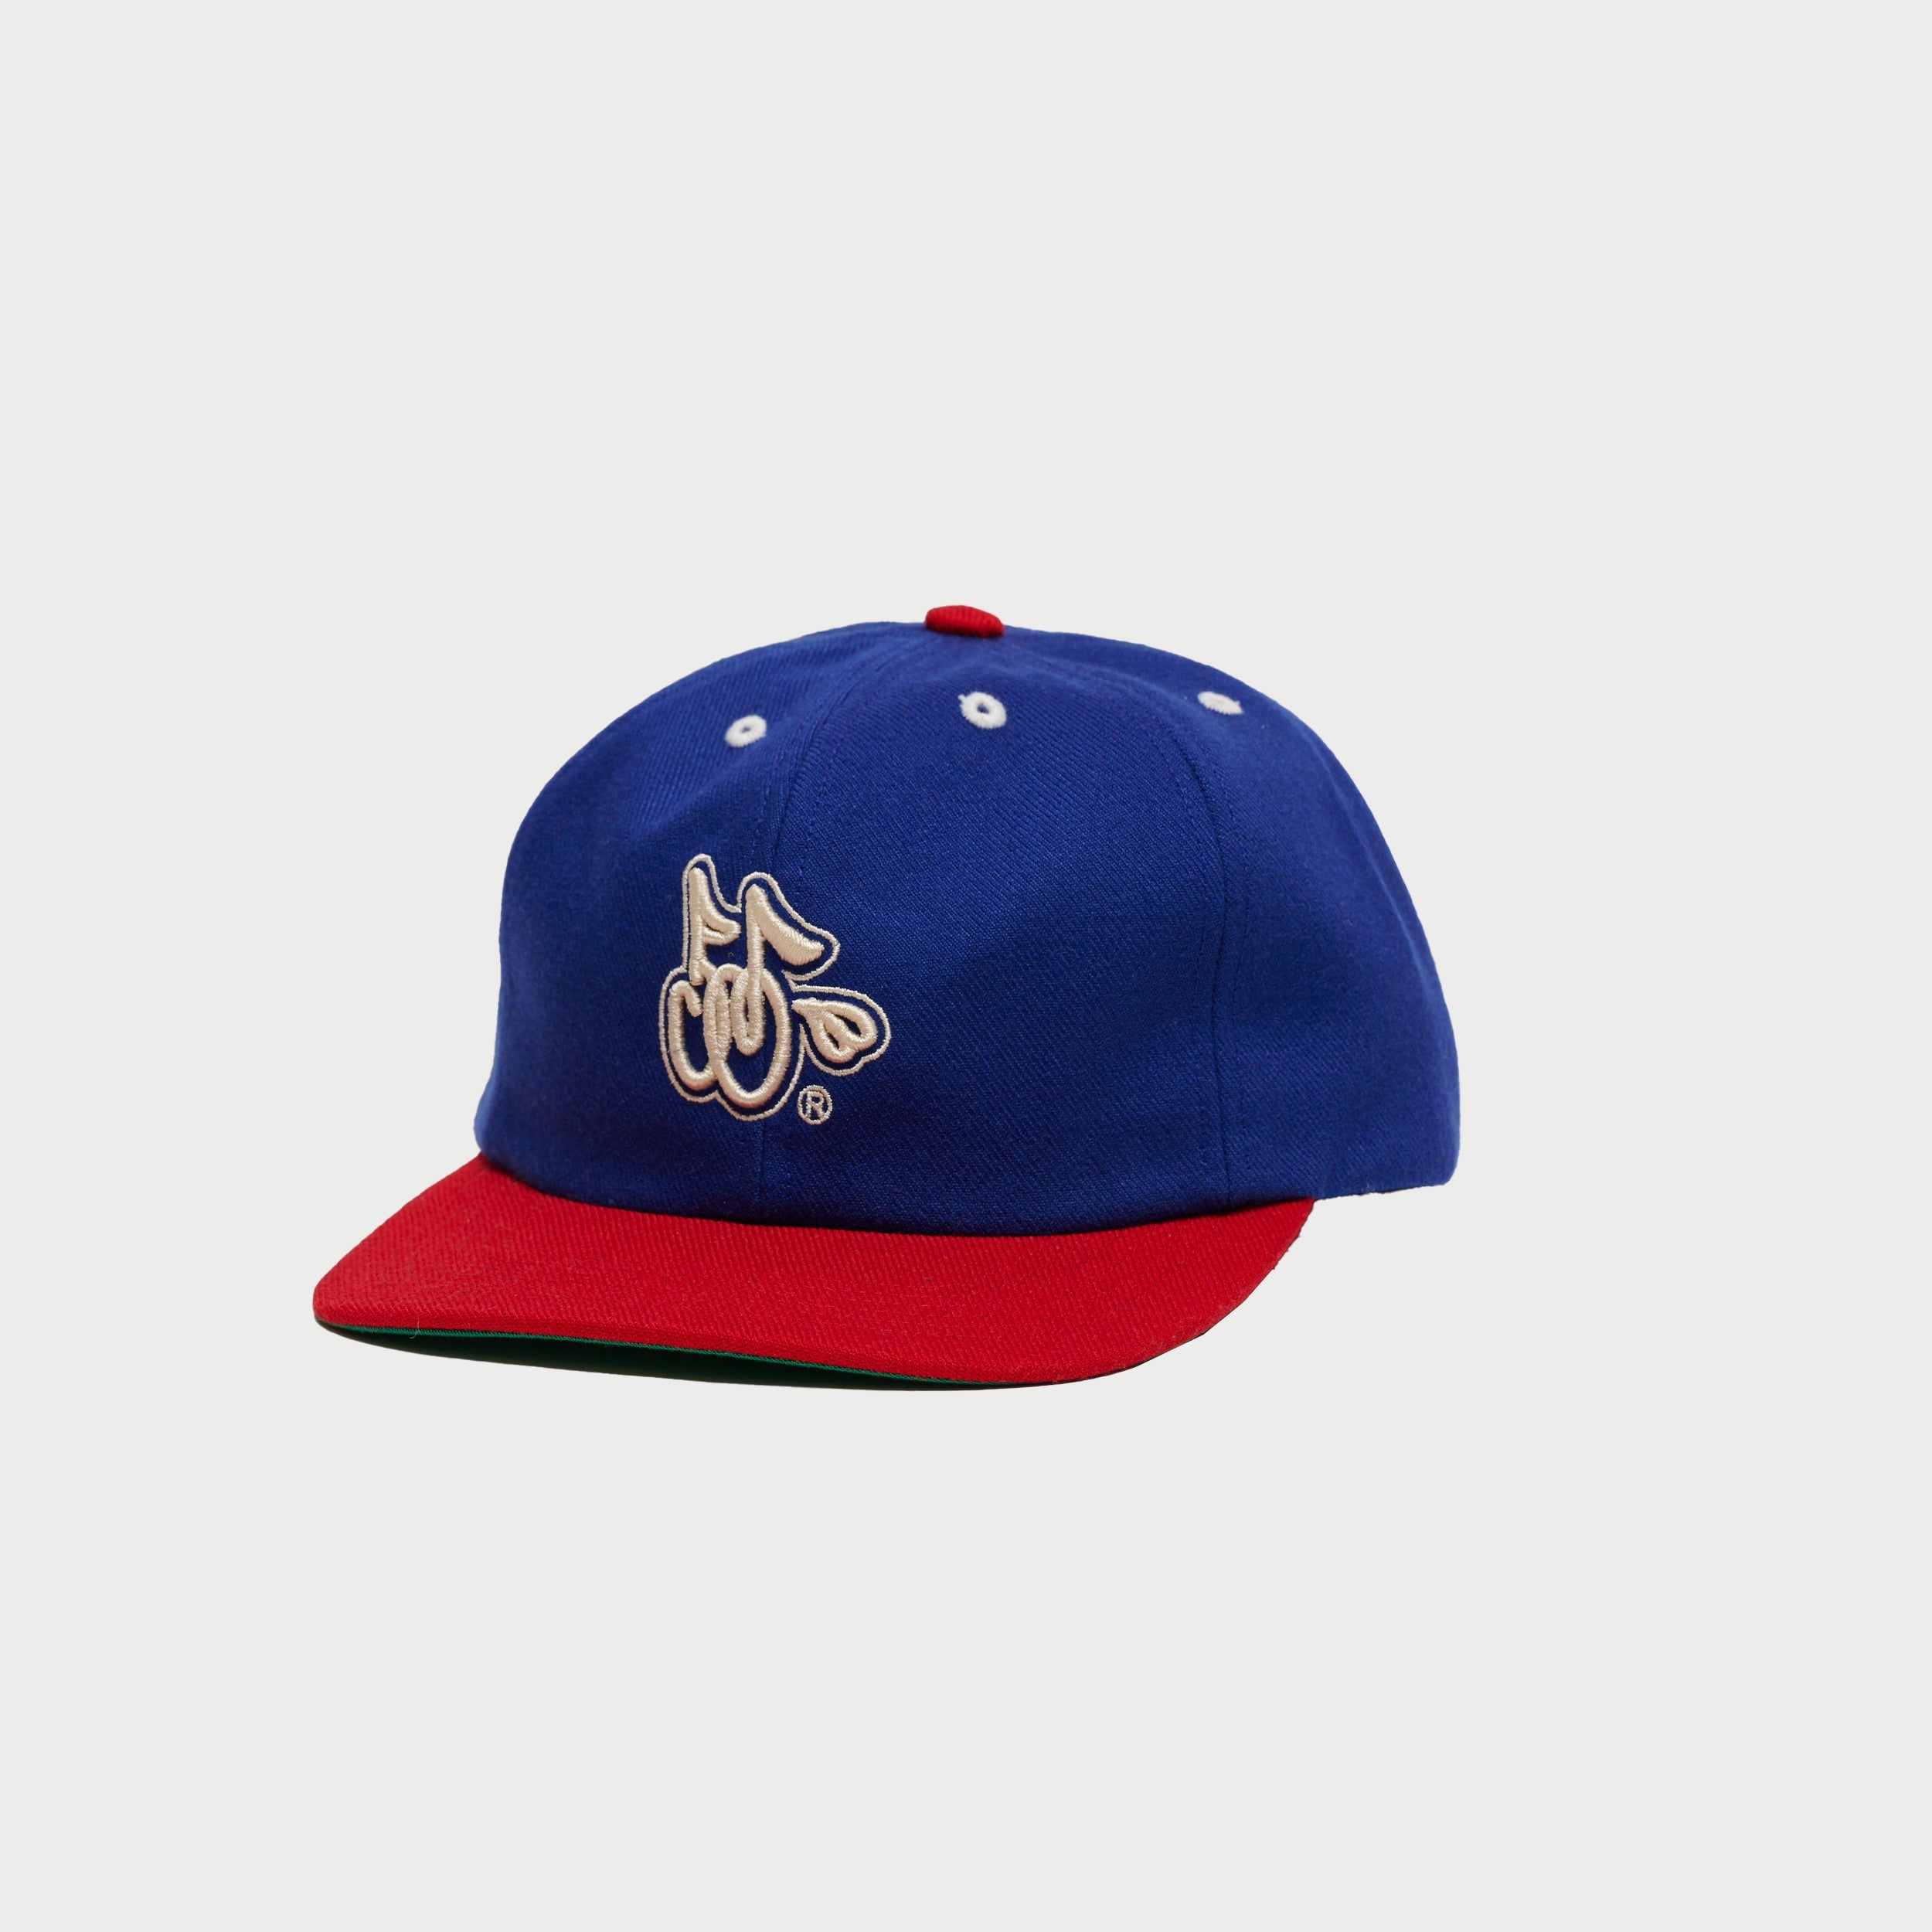 Team Hat (USA)